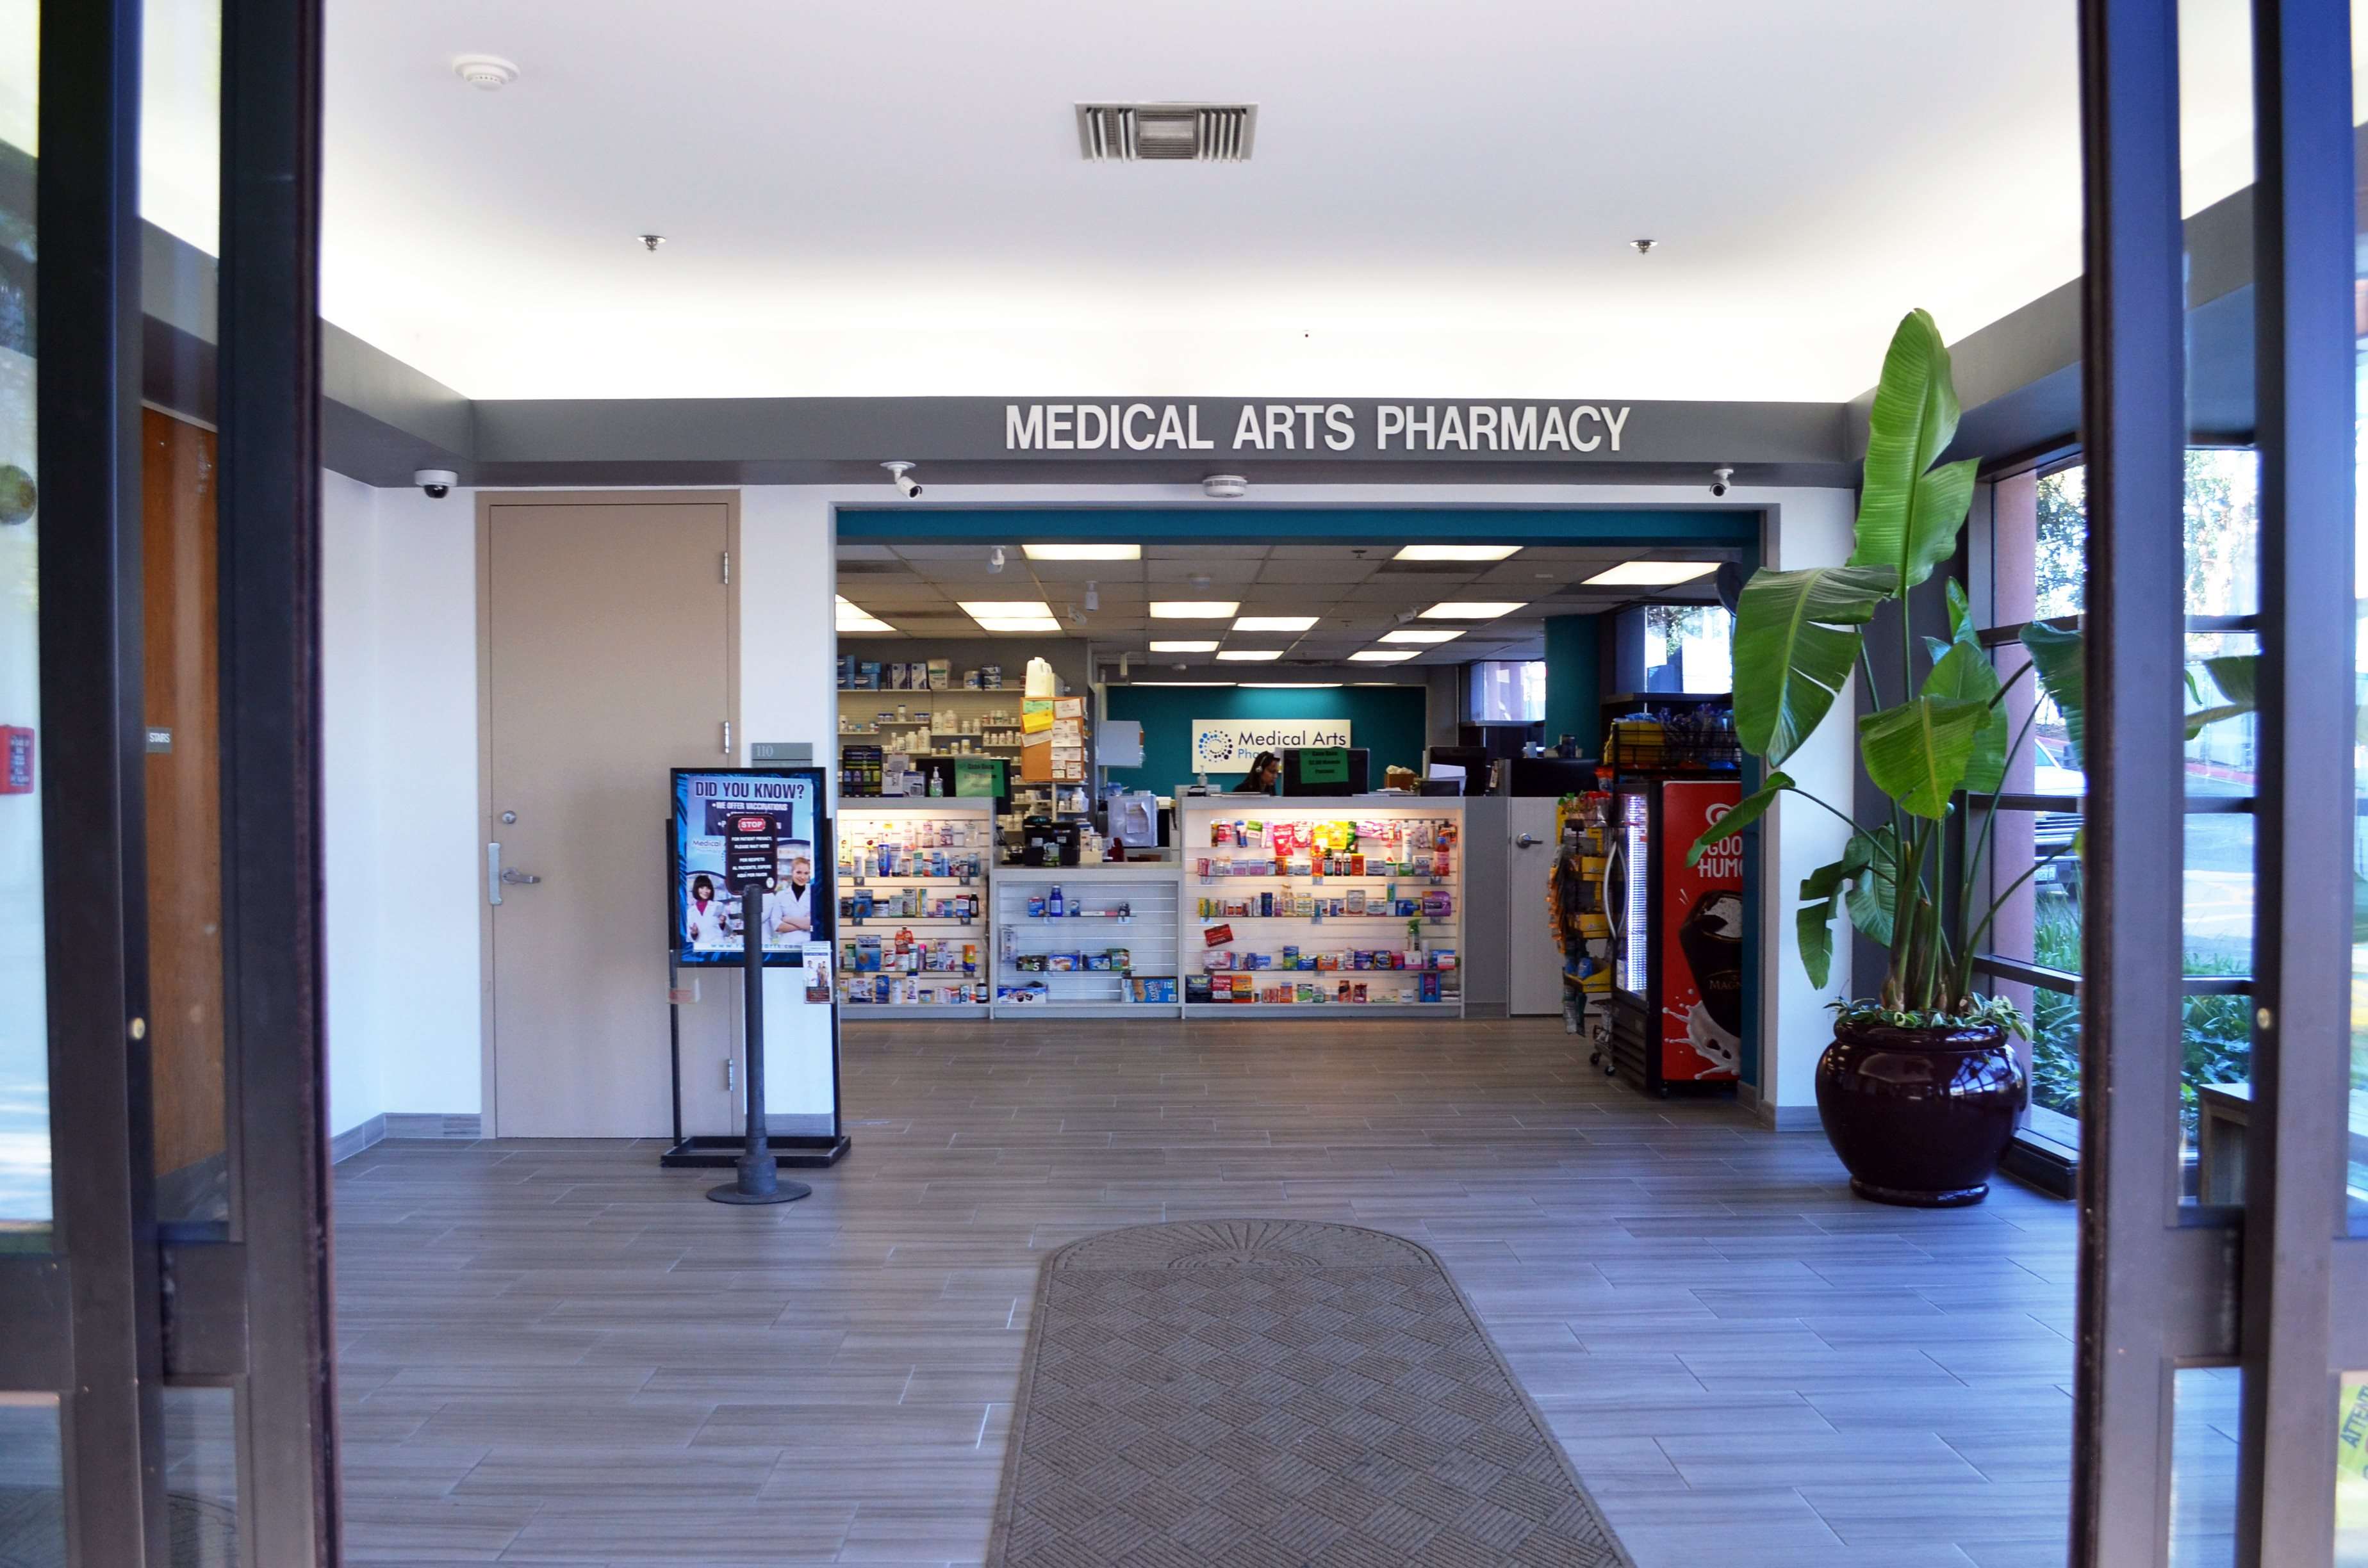 Inside of Medical Arts Pharmacy